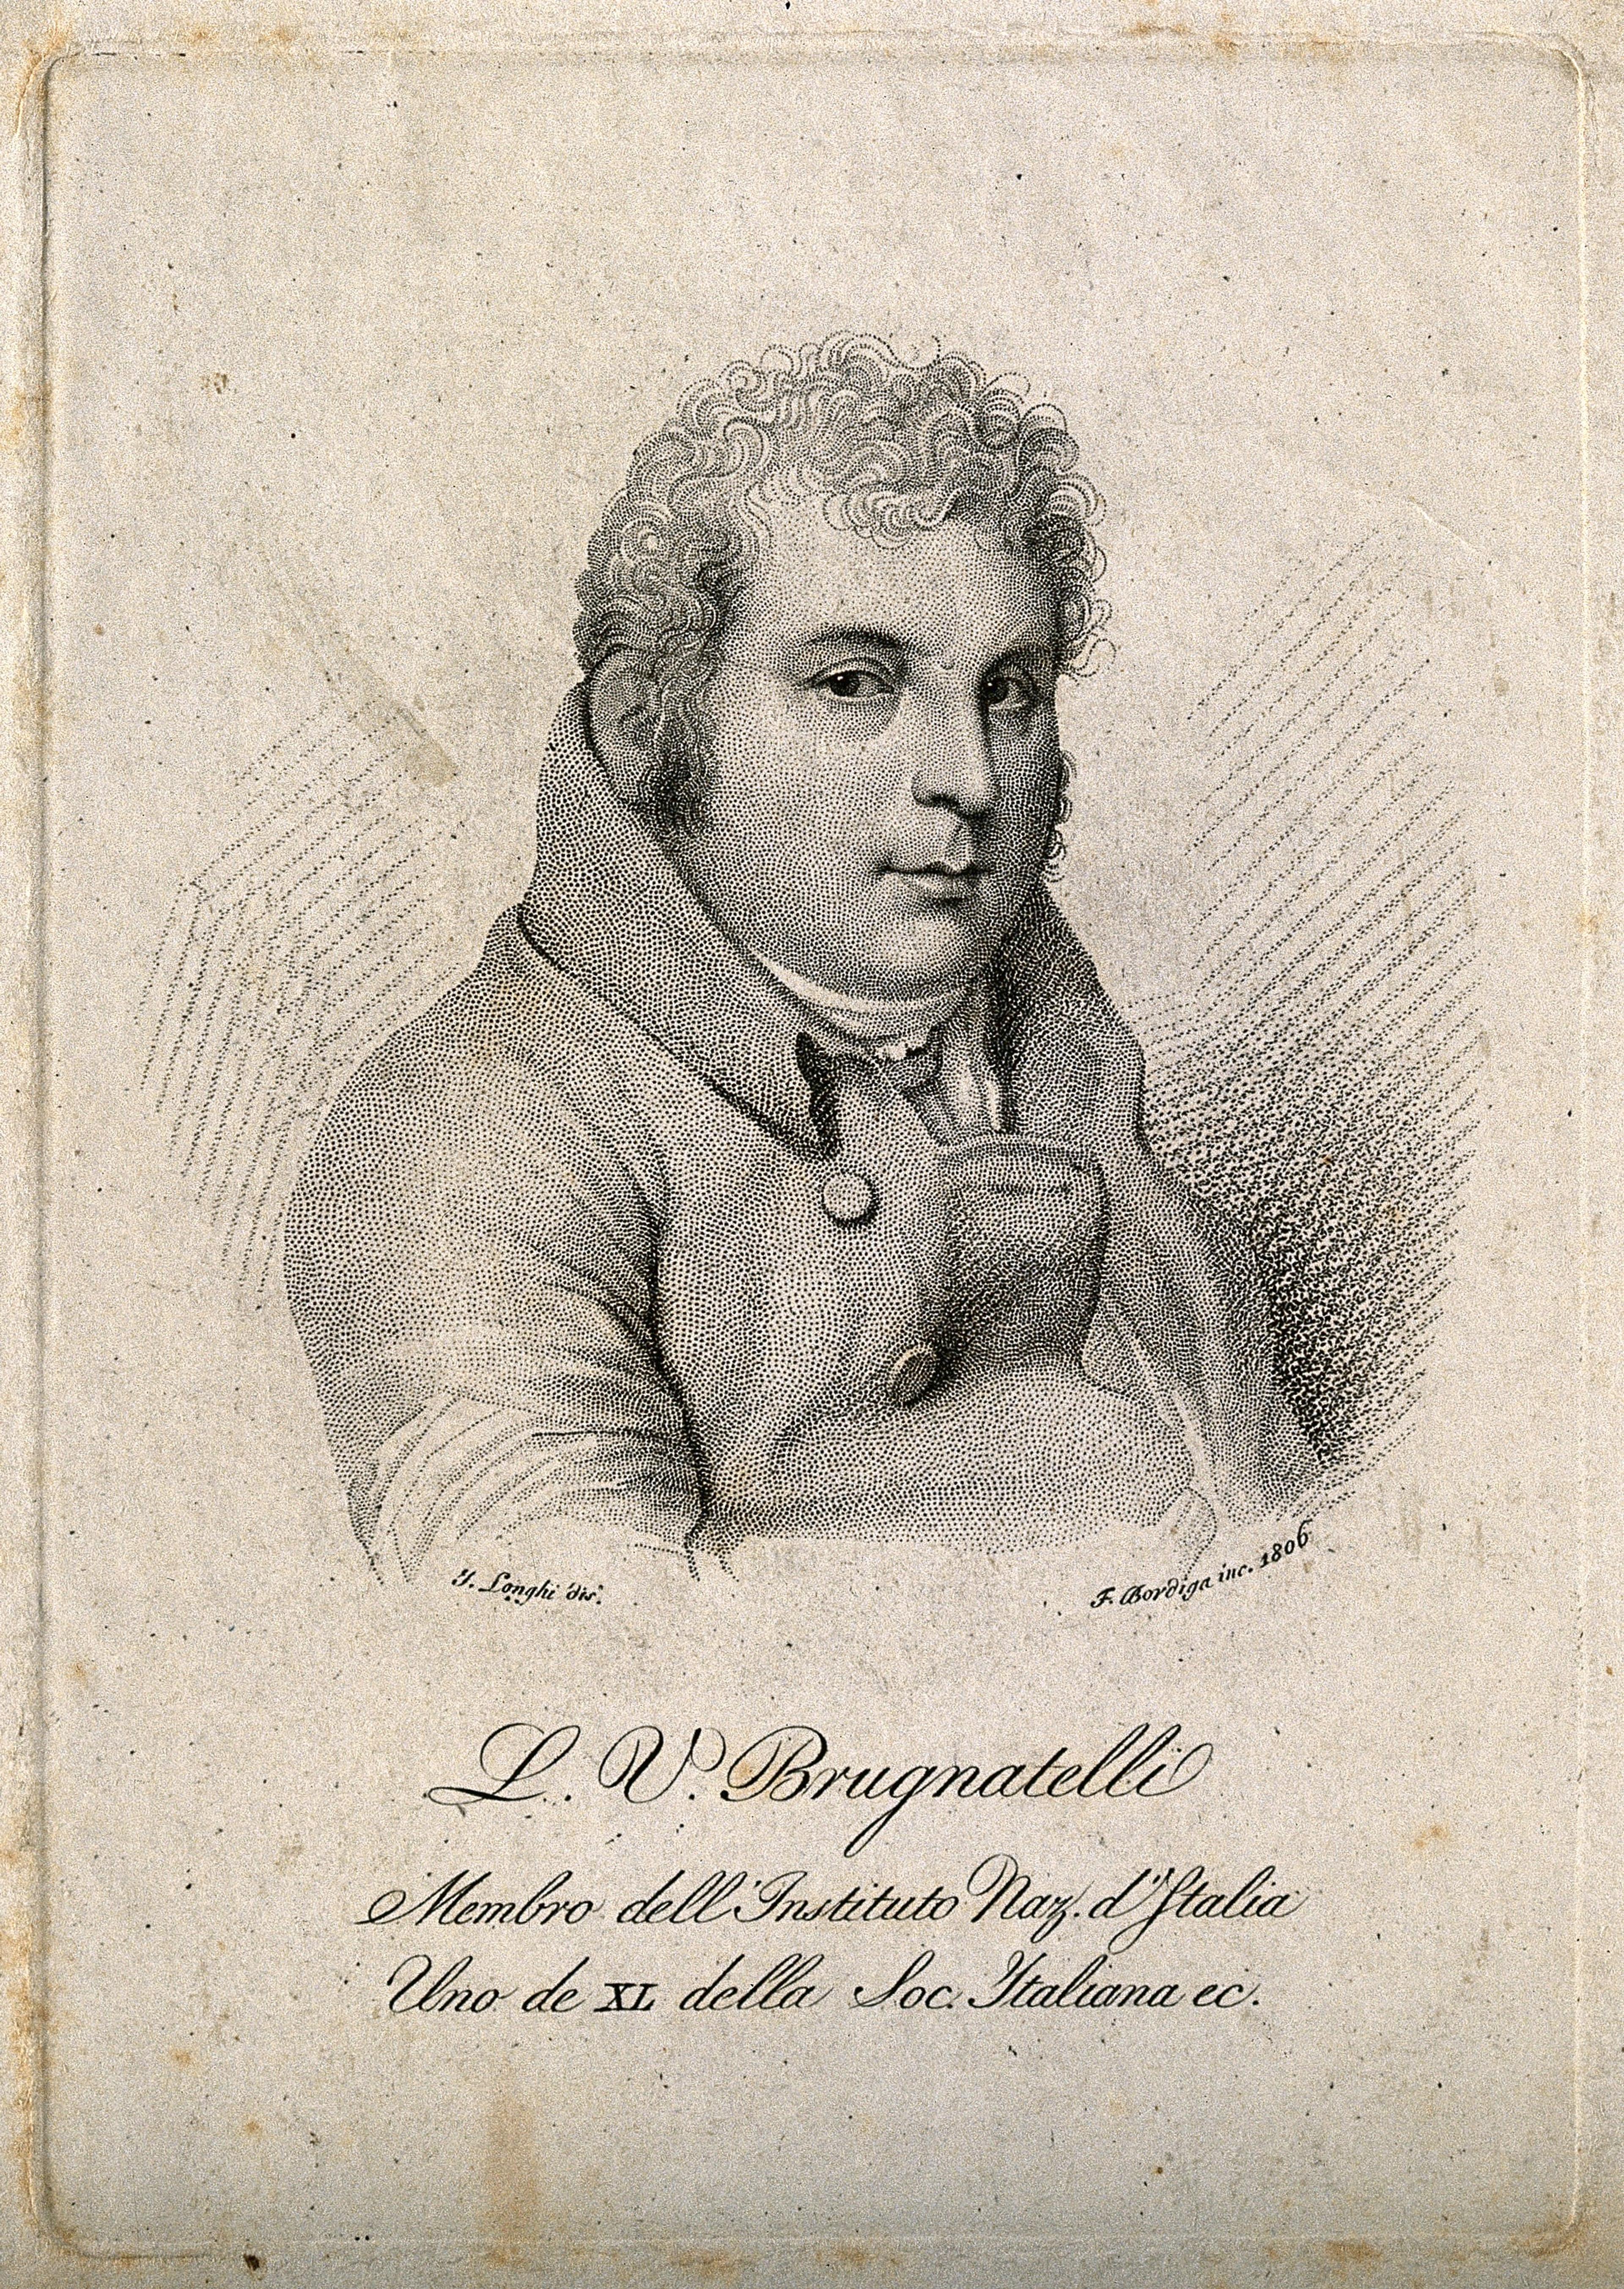 A print of Luigi Valentino Brugnatelli, the Italian inventor credited to inventing electroplating.